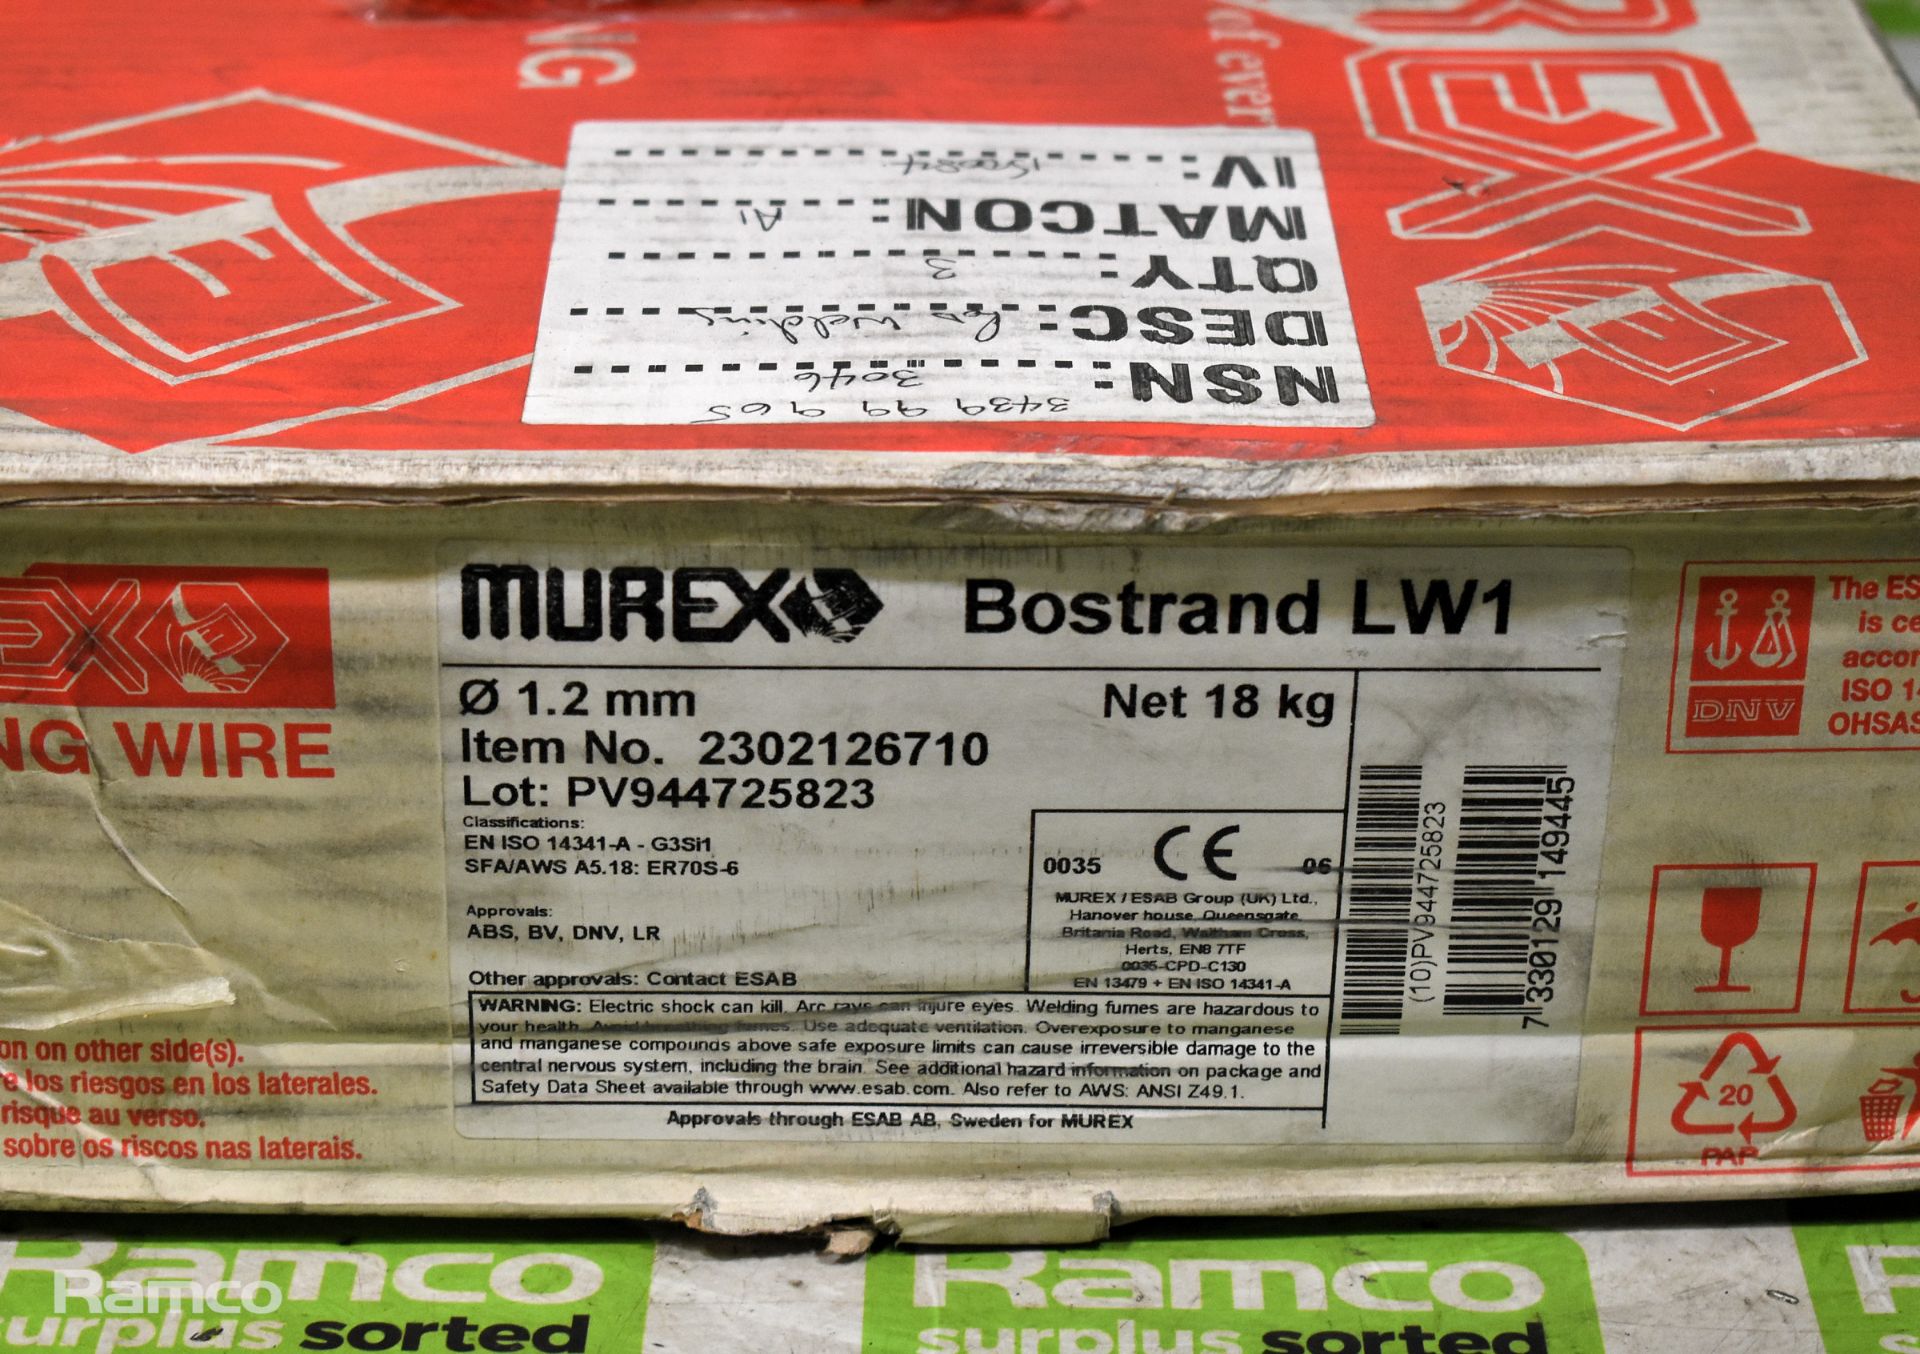 Murex Bostrand LW1 1.2mm welding wire on spool - Image 2 of 3